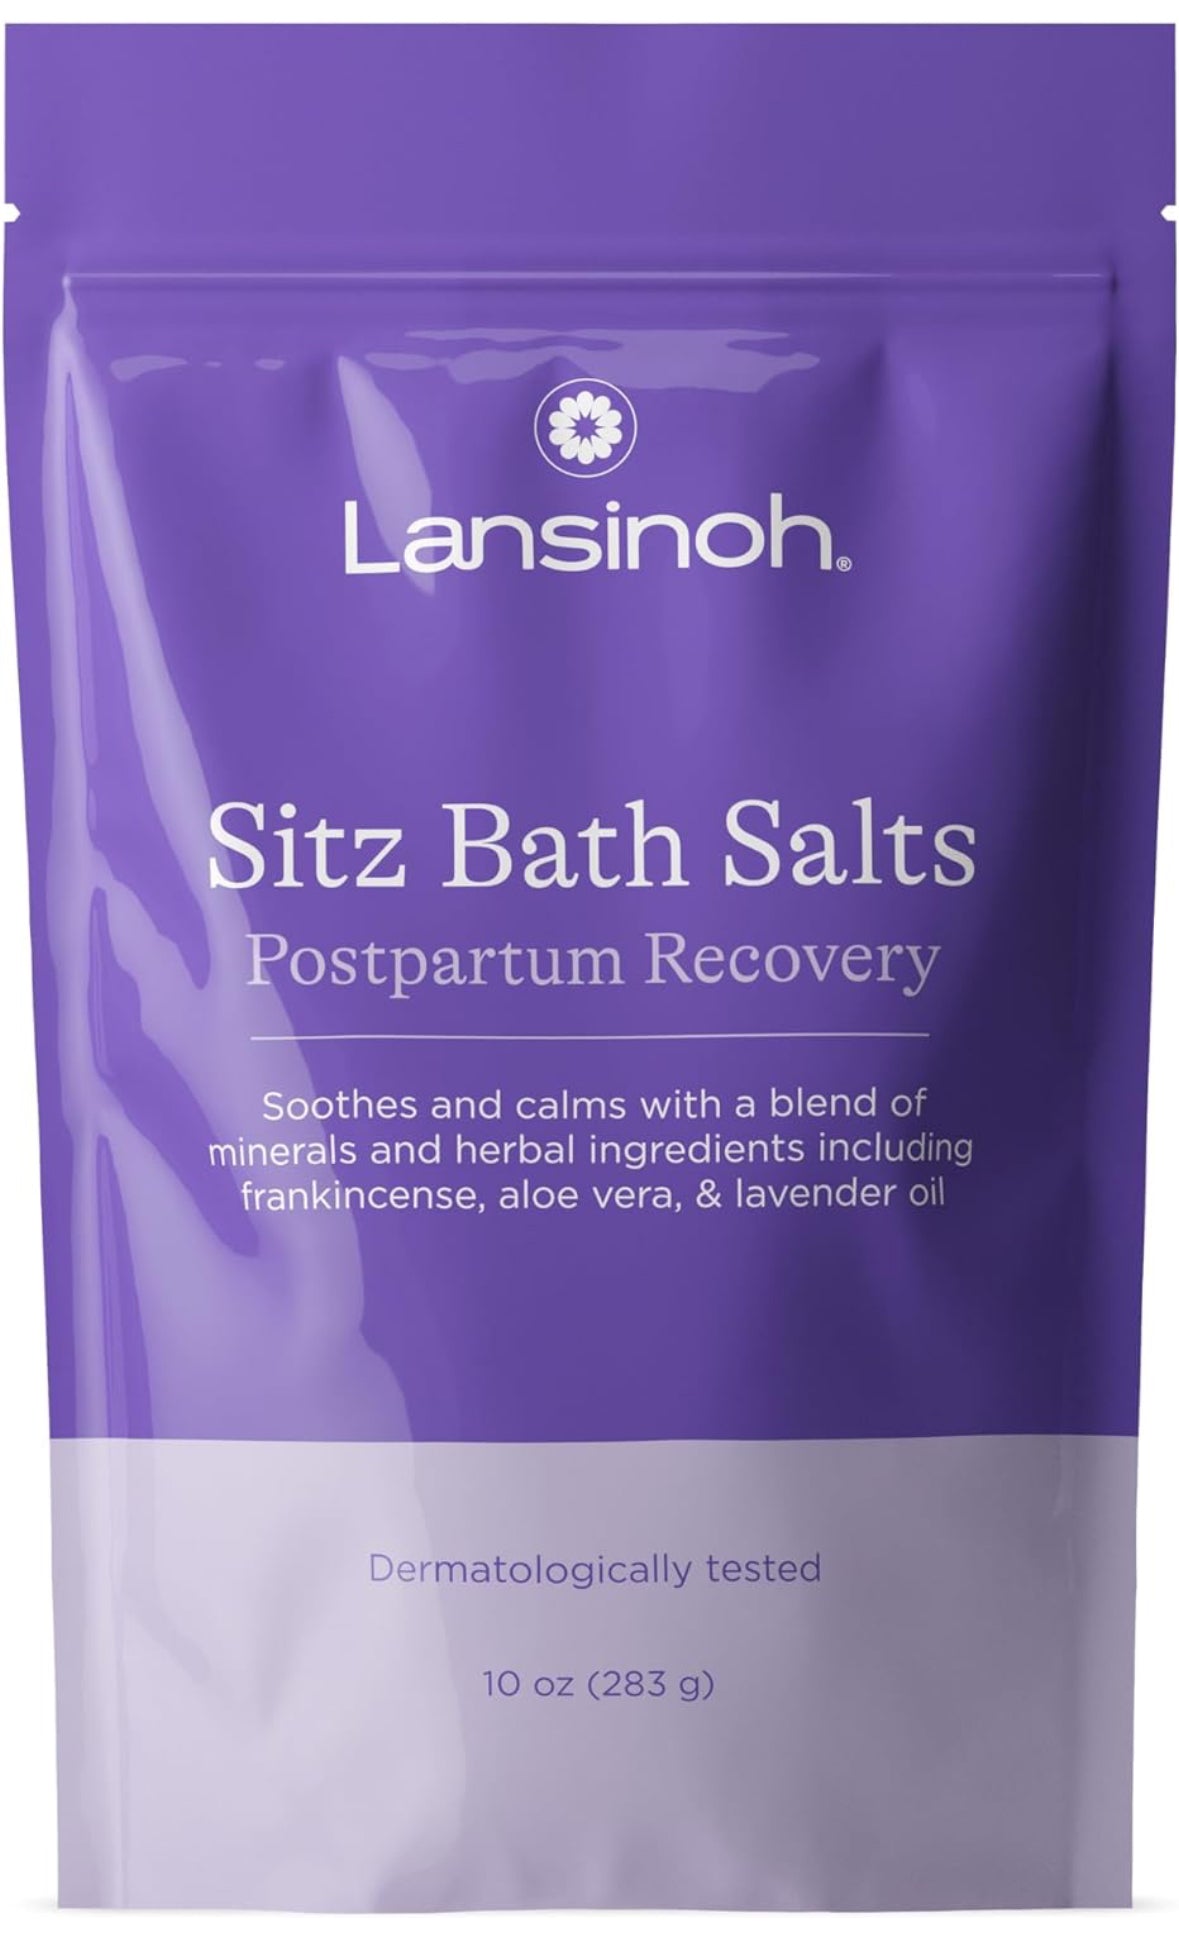 Sitz Bath Salts Postpartum by Lansinoh, 283g